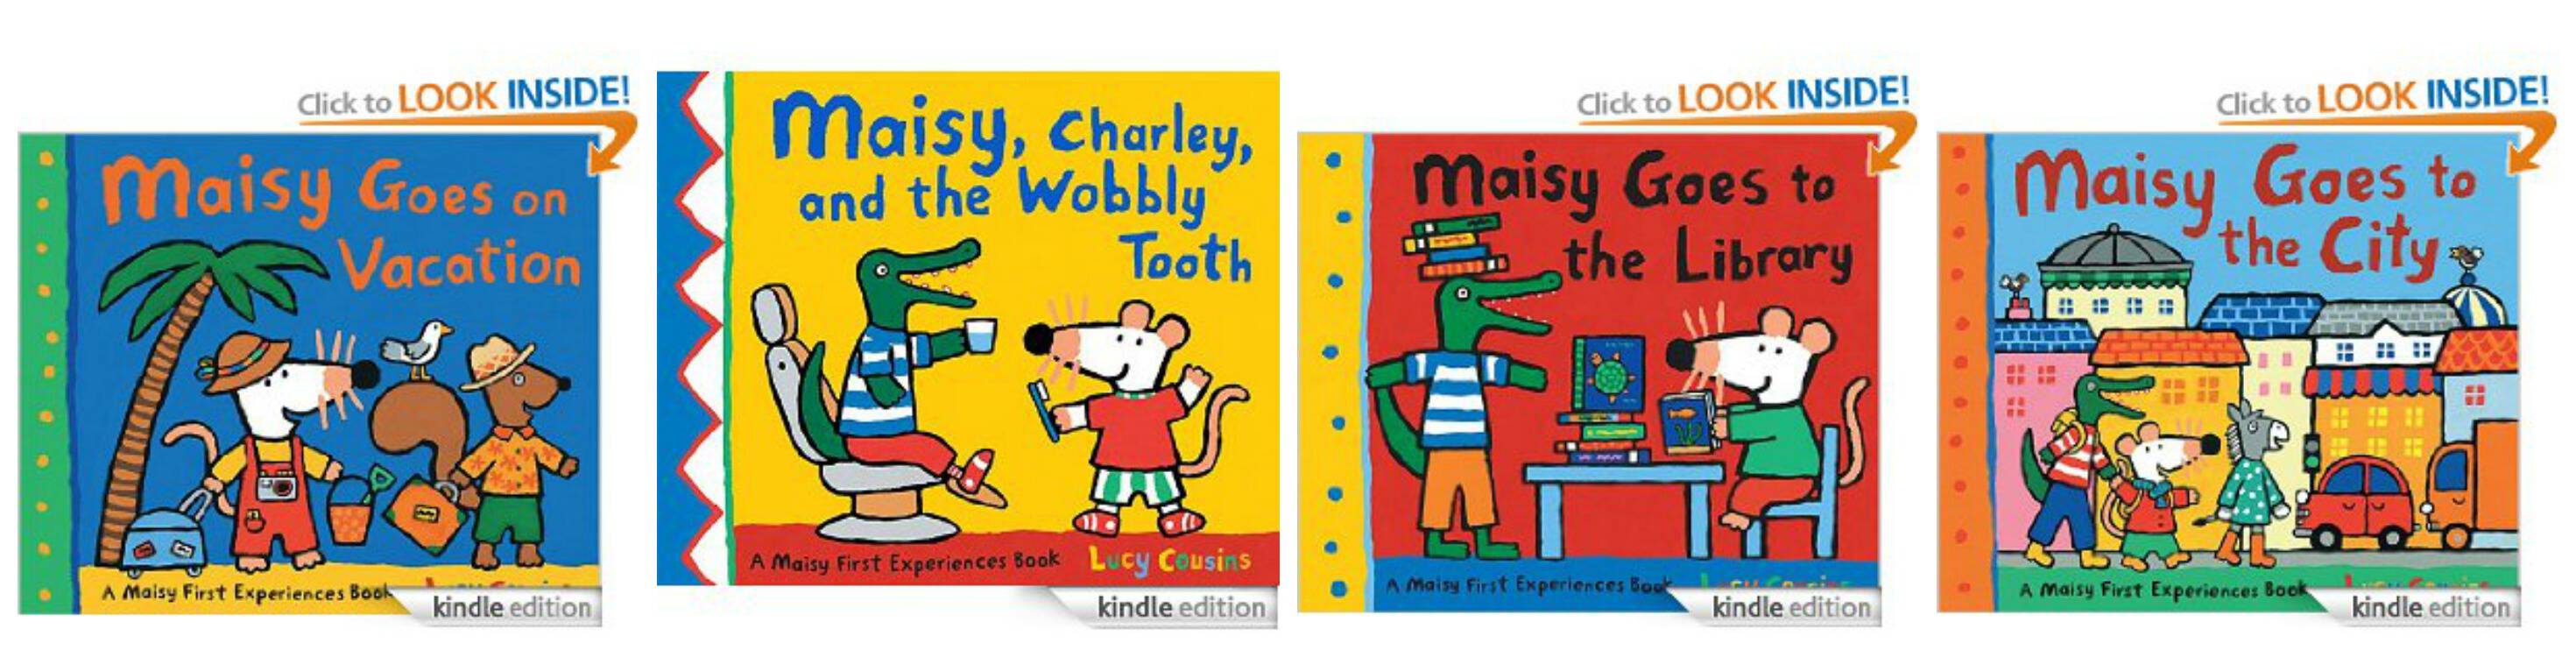 Maisy Books for Kindle